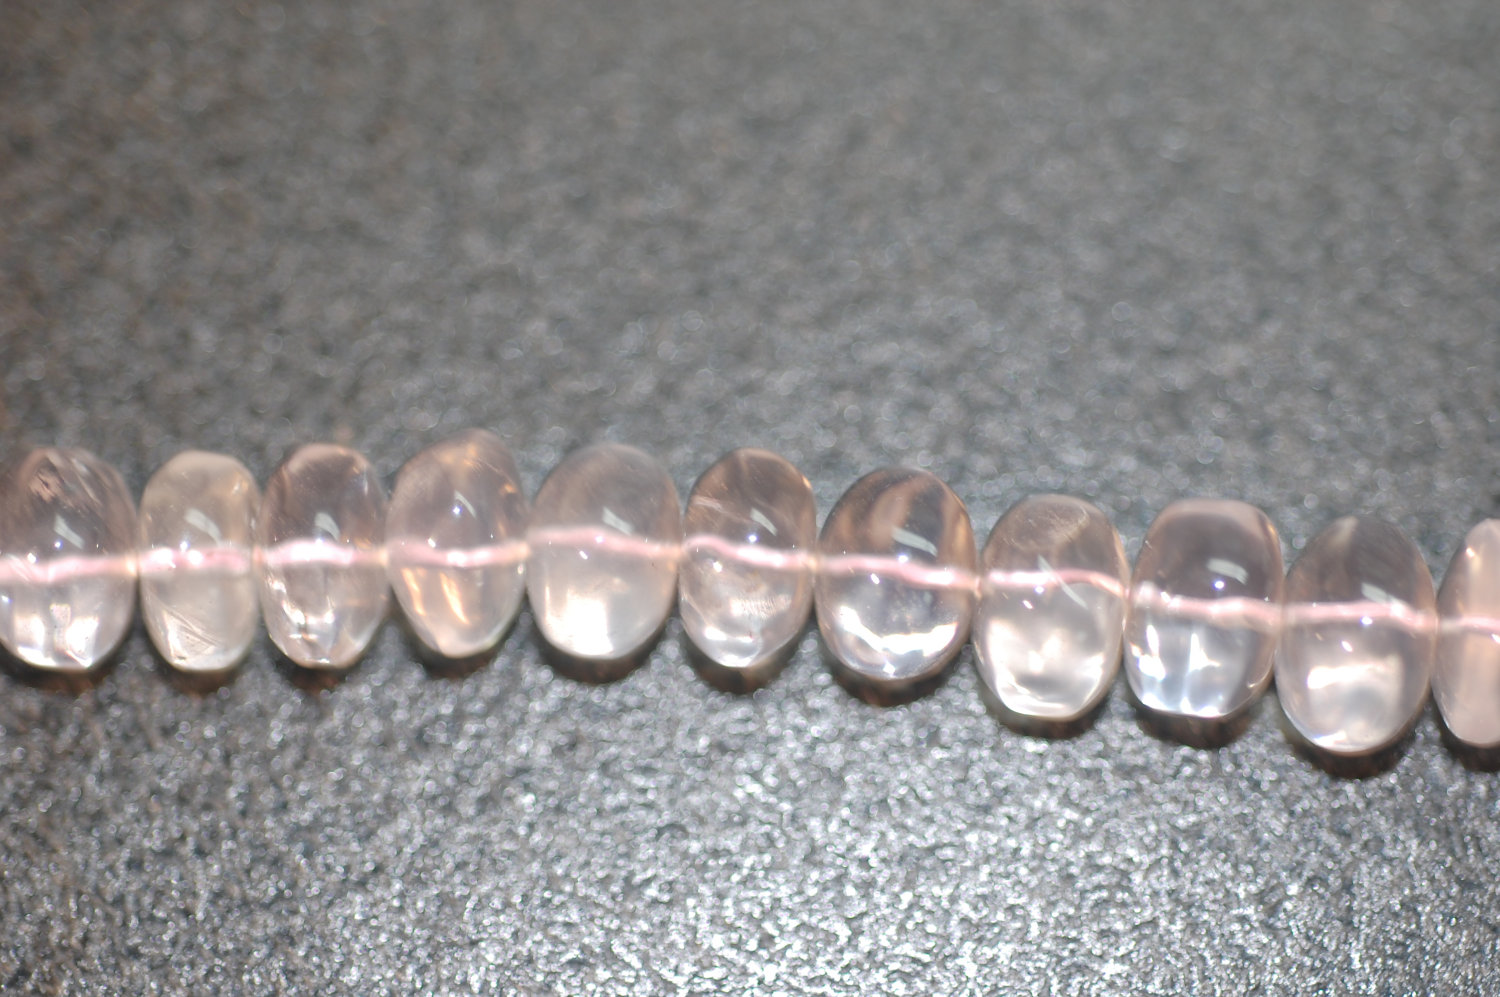 Rose Quartz Smooth Round Beads